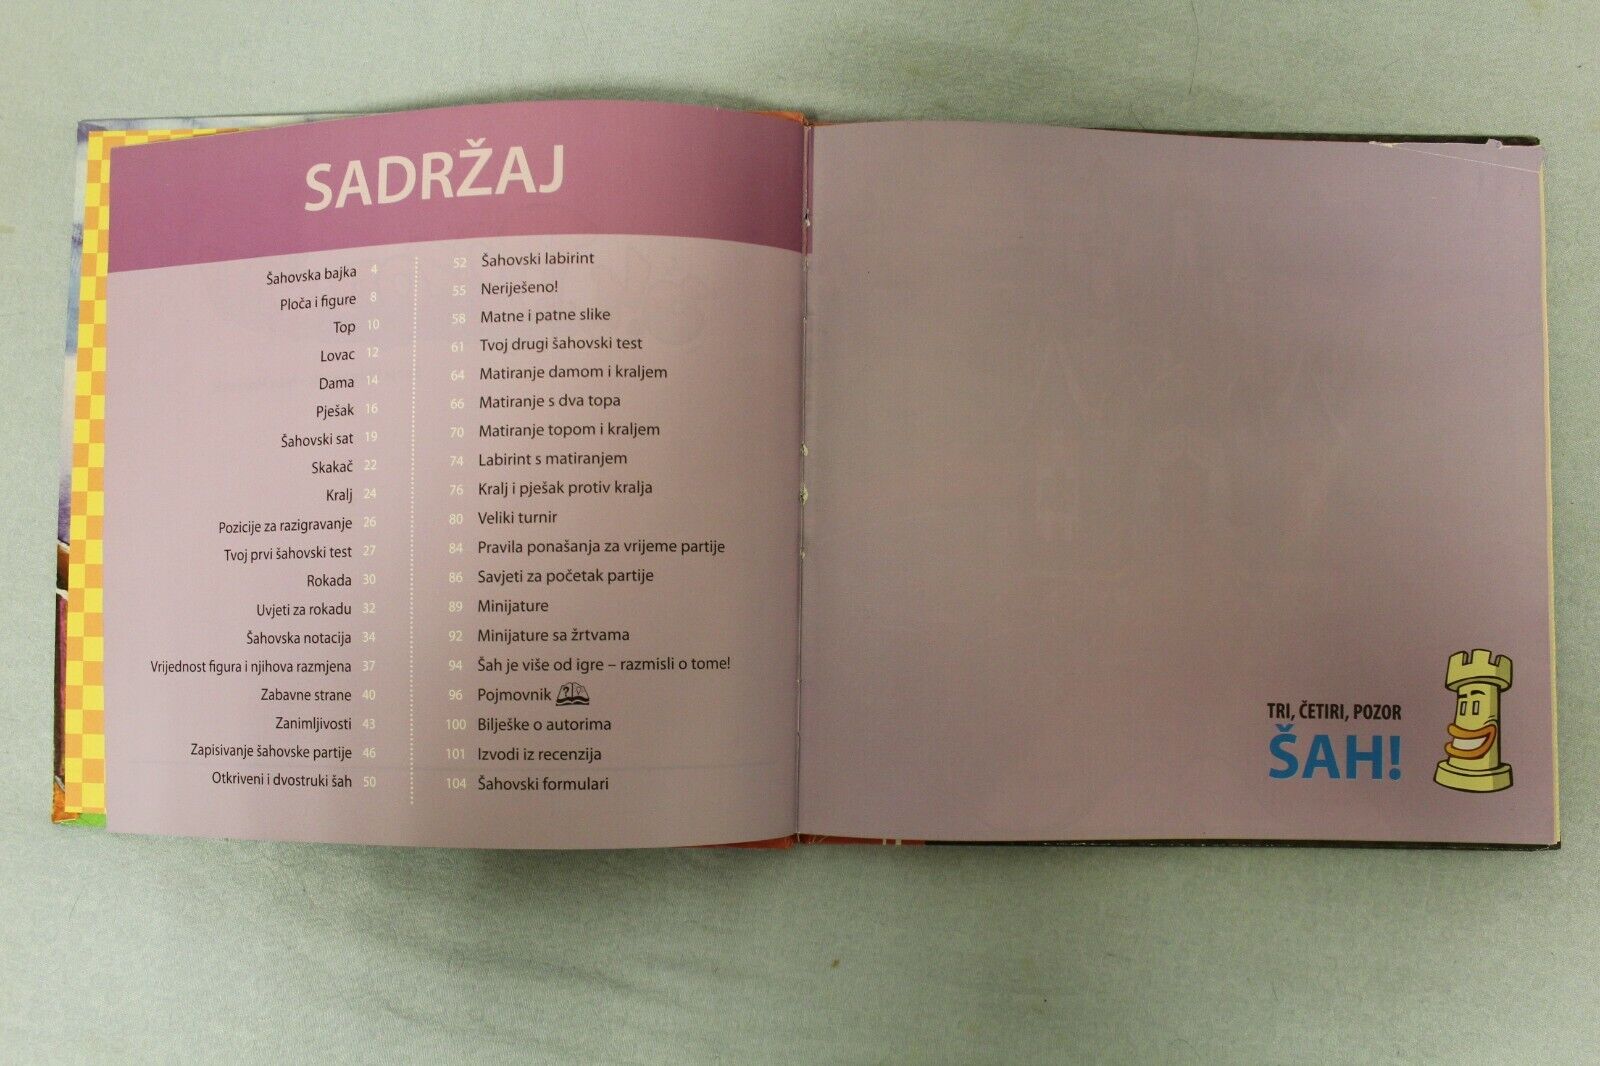 11660.Set: Chess Kids Children Tutorial Croatian book & Notebook Tri, Cetiri, Pozor, S